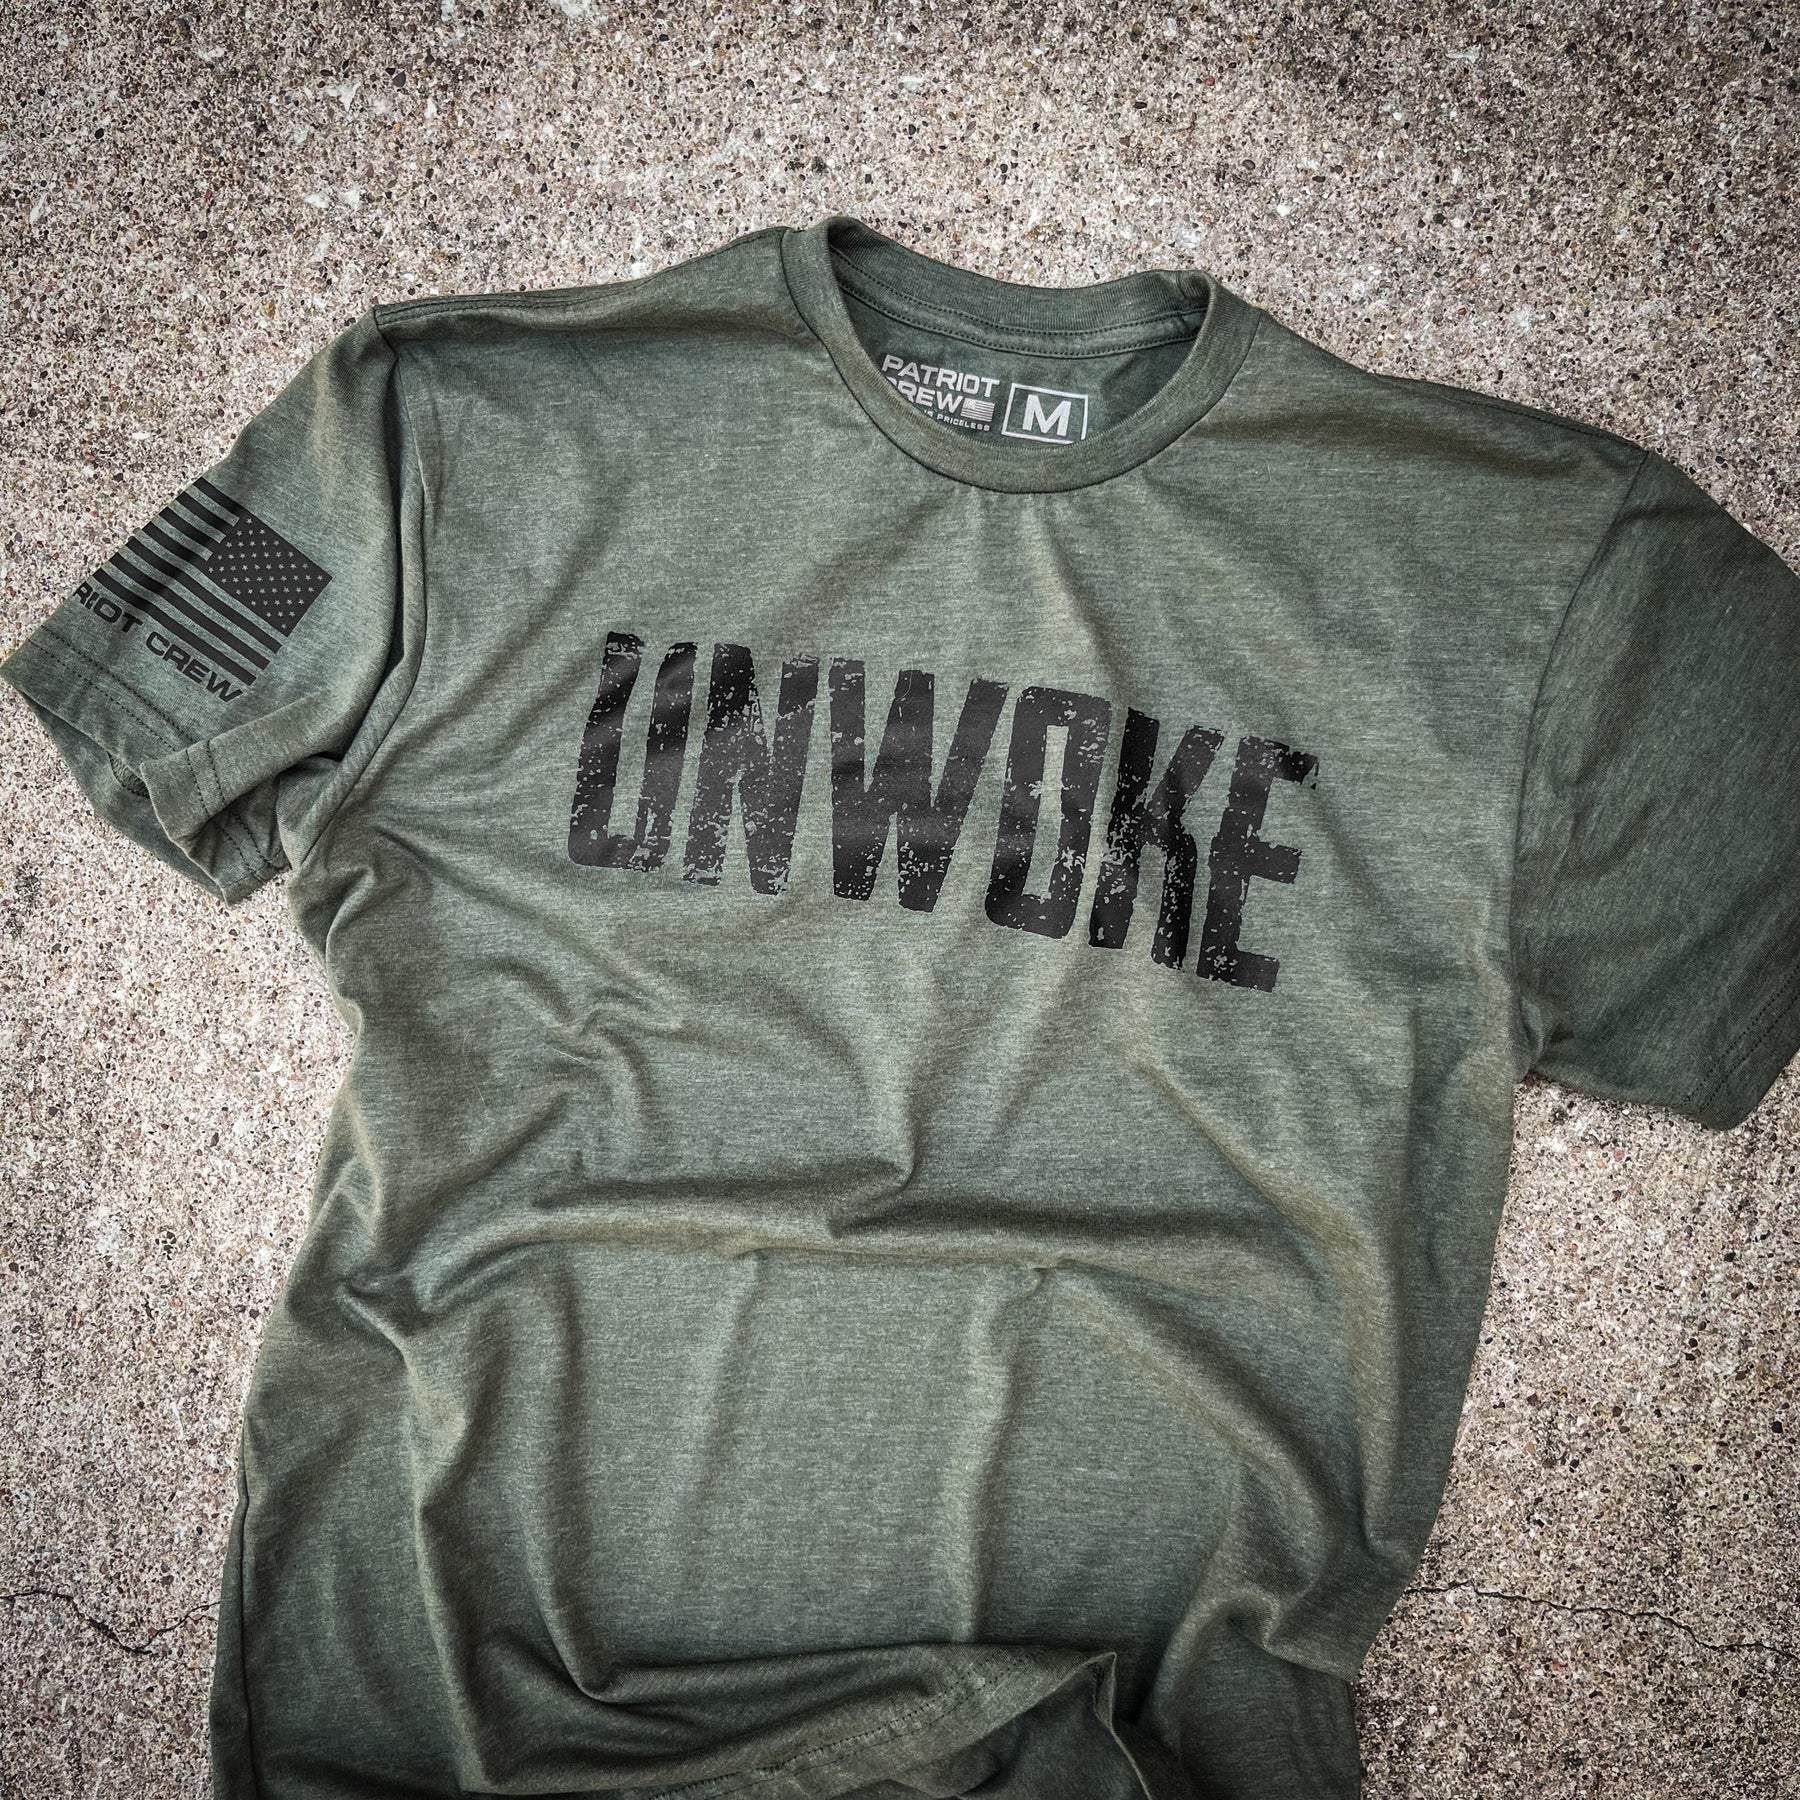 Unwoke T-Shirt